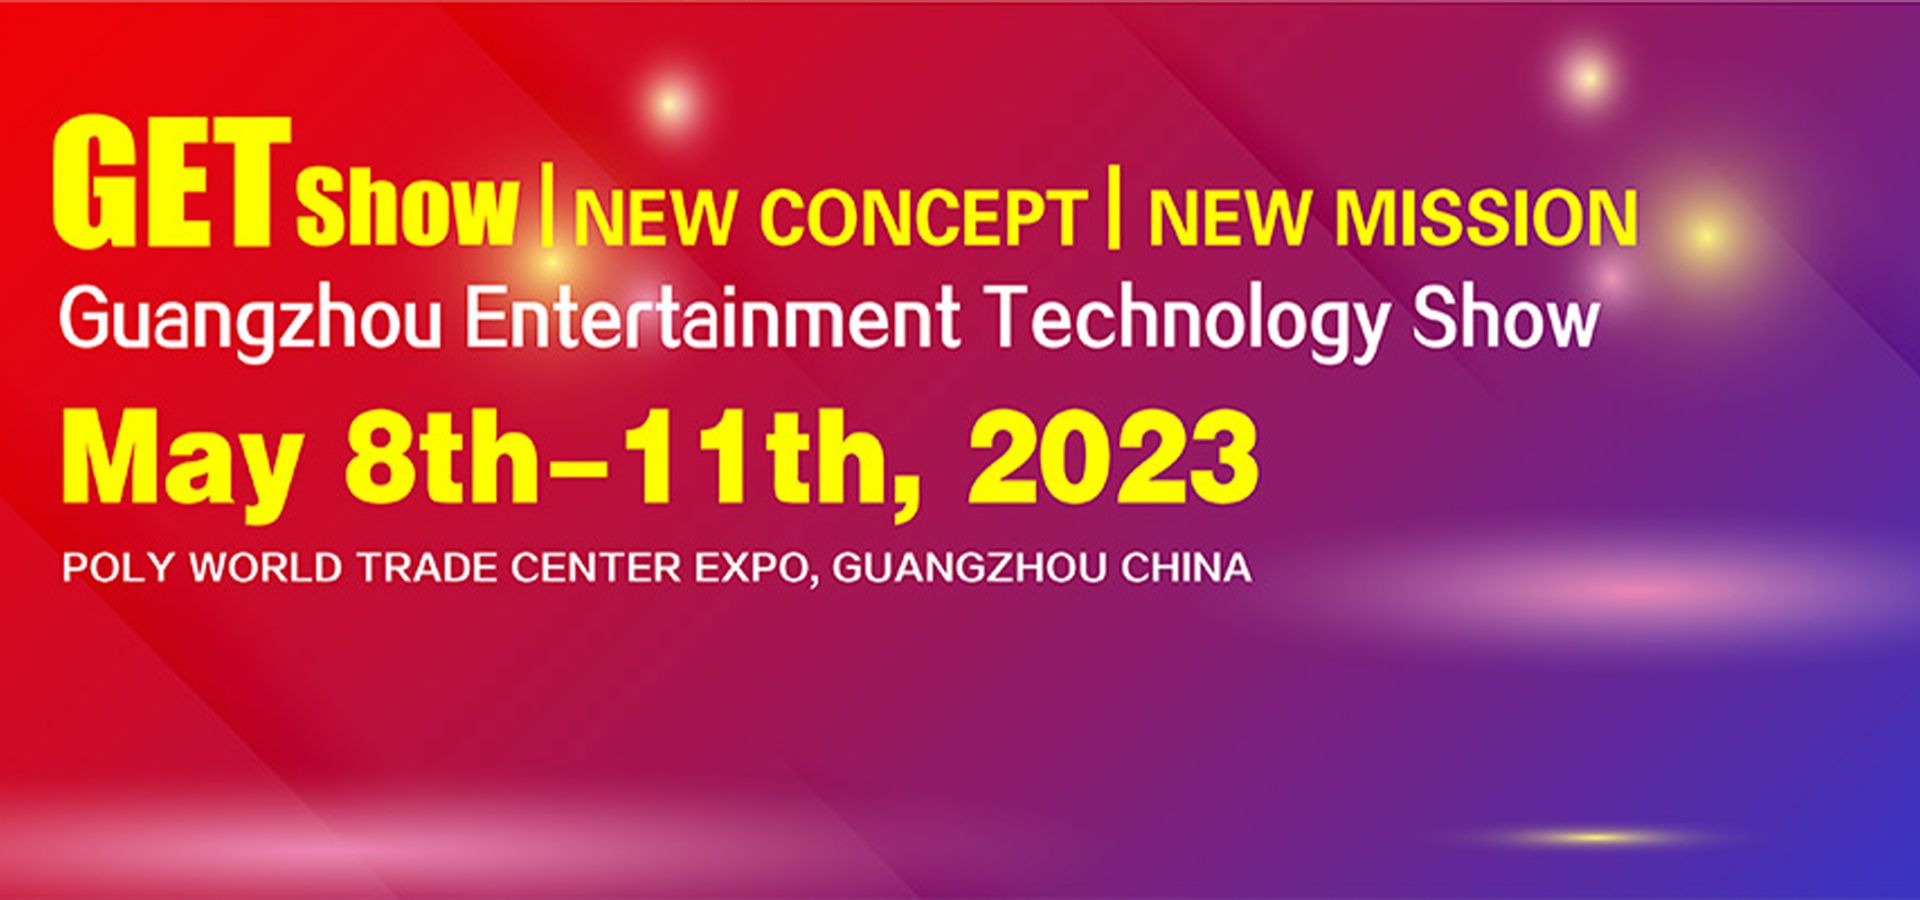 GET show (GUANGZHOU ENTERTAINMENT TECHNOLOGY SHOW) 2023